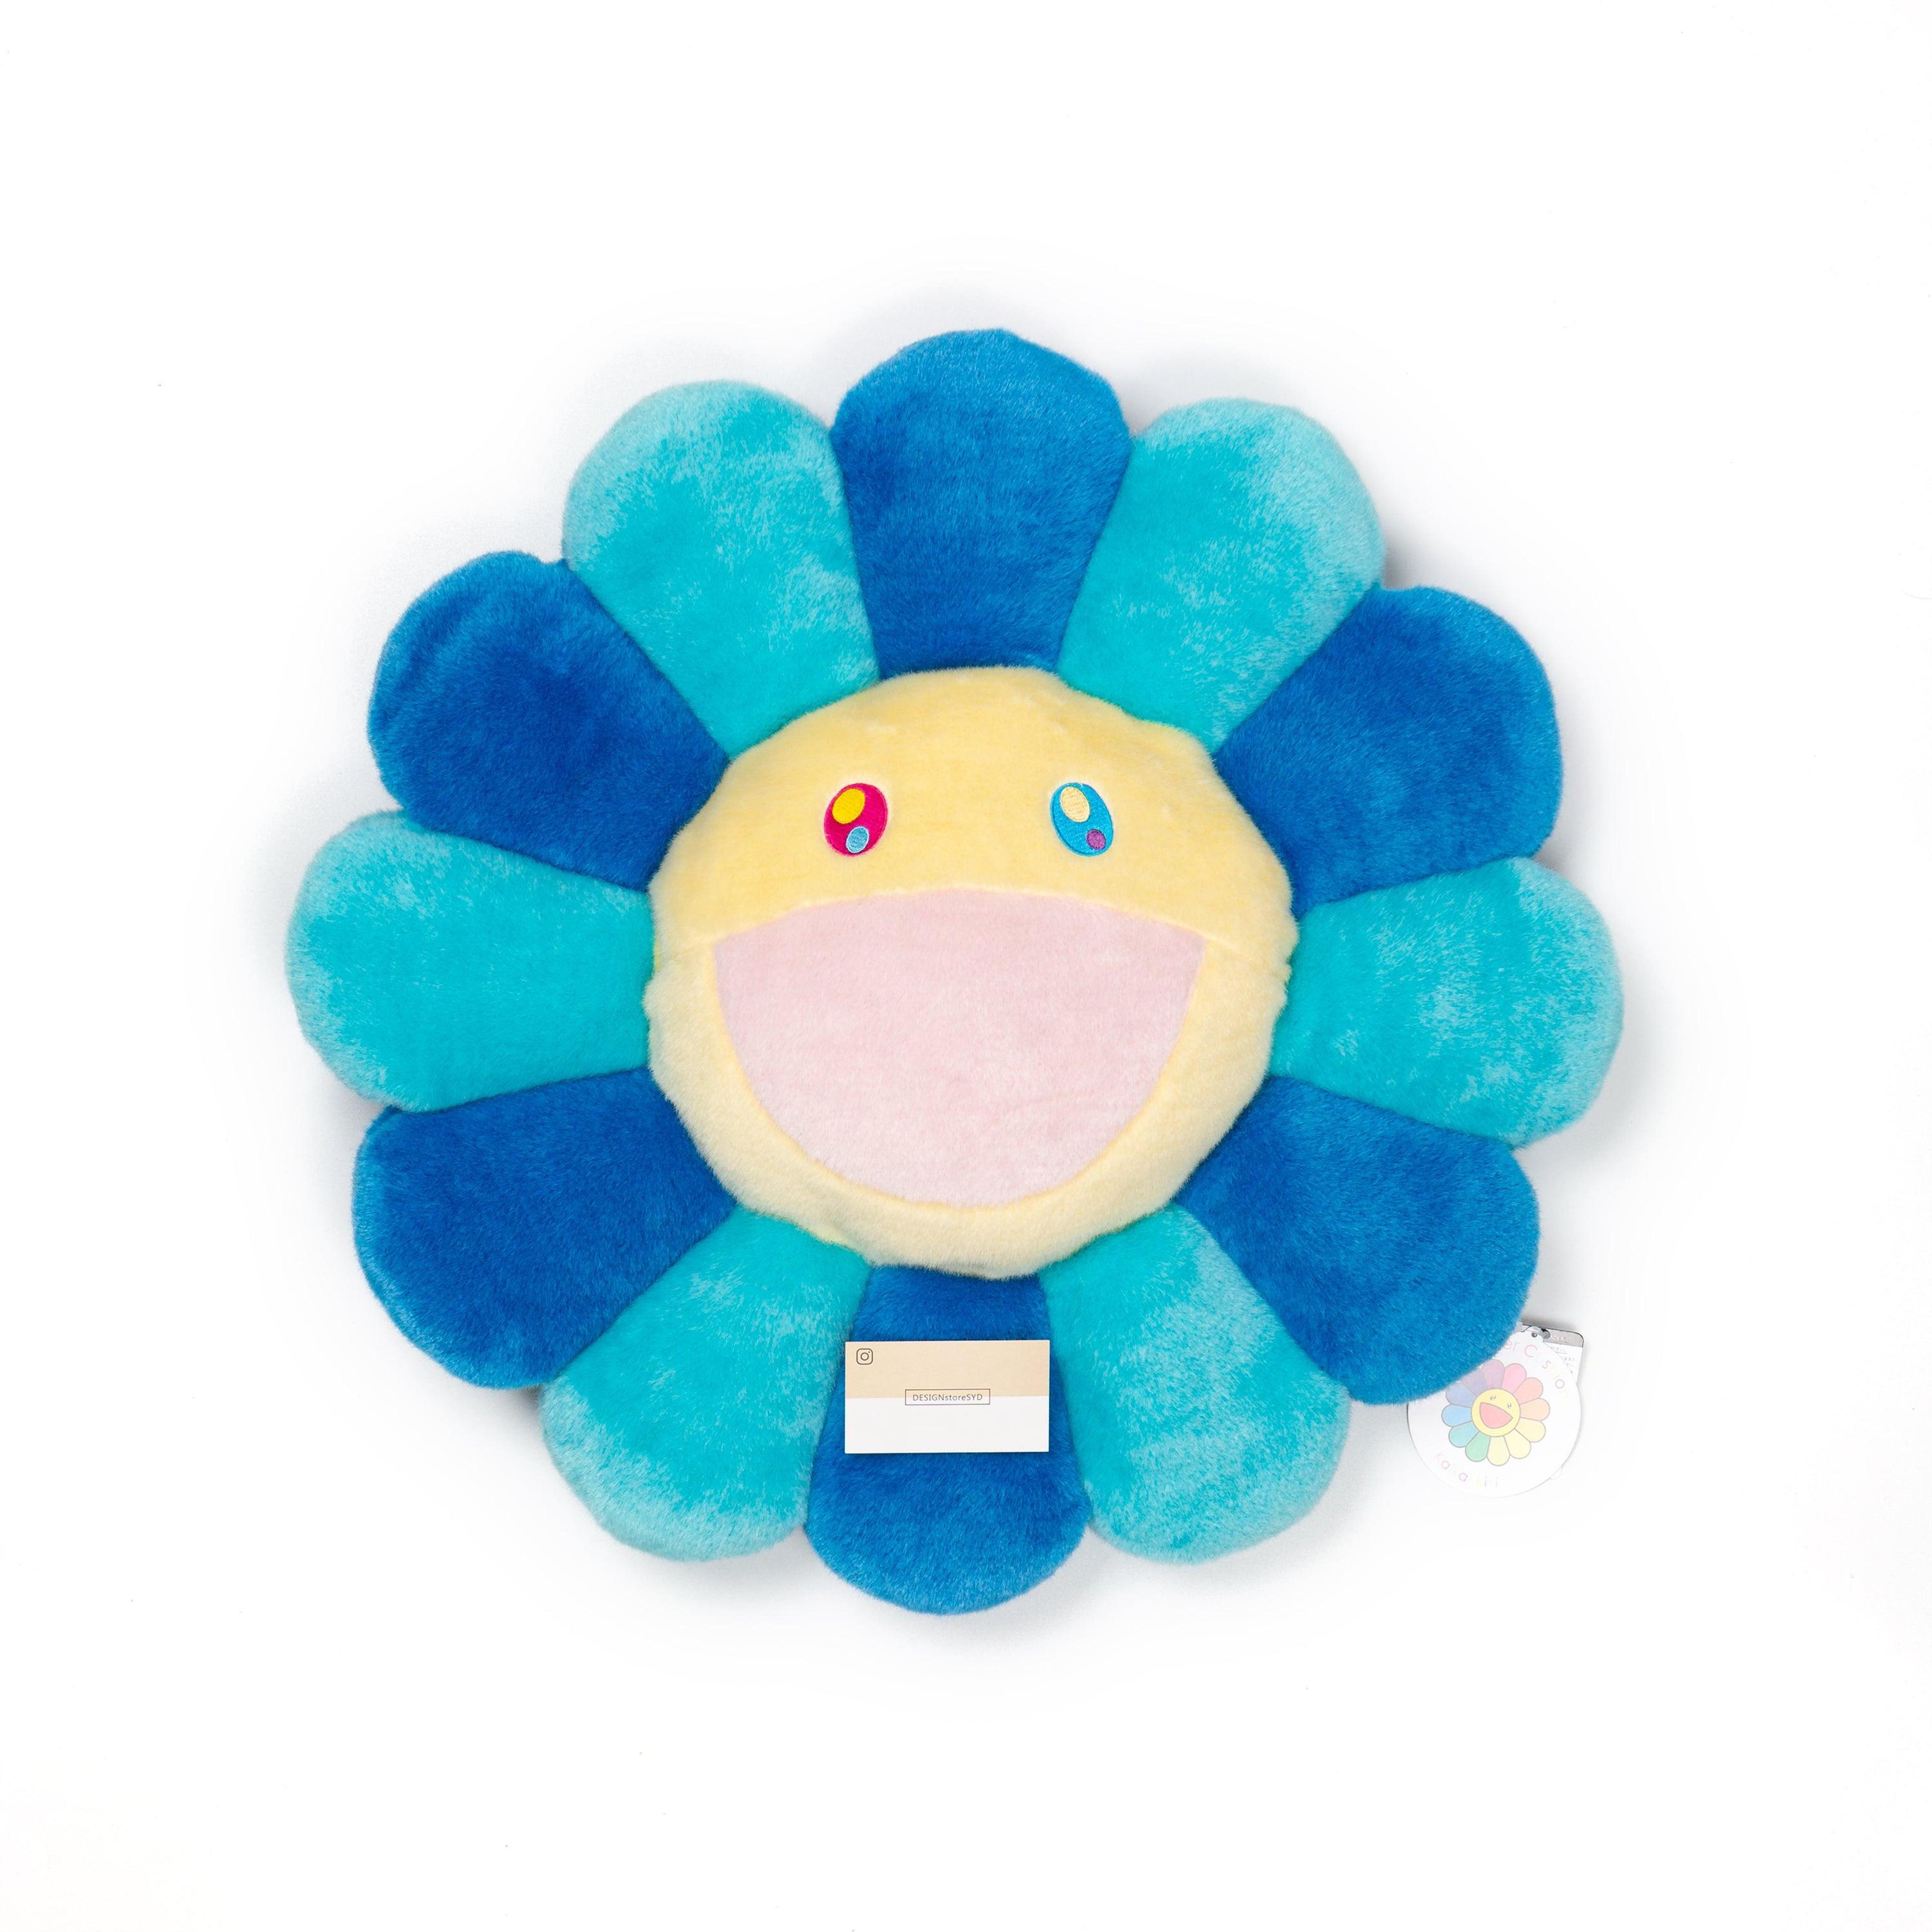 Takashi Murakami Flower Pillow Blue and Lt Blue